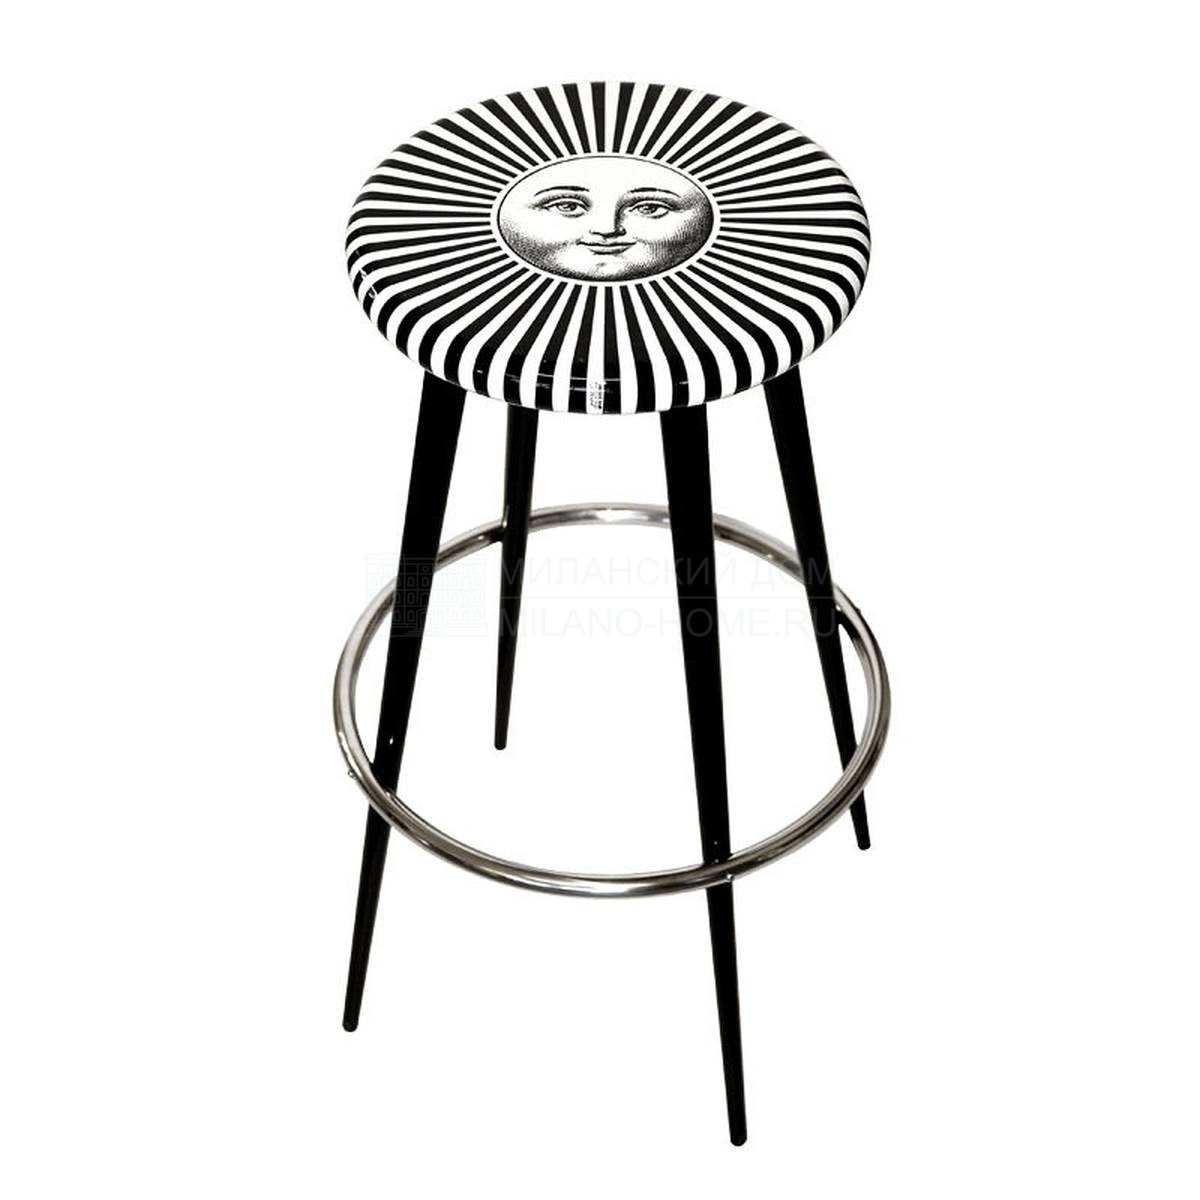 Барный стул Sole bar stool из Италии фабрики FORNASETTI